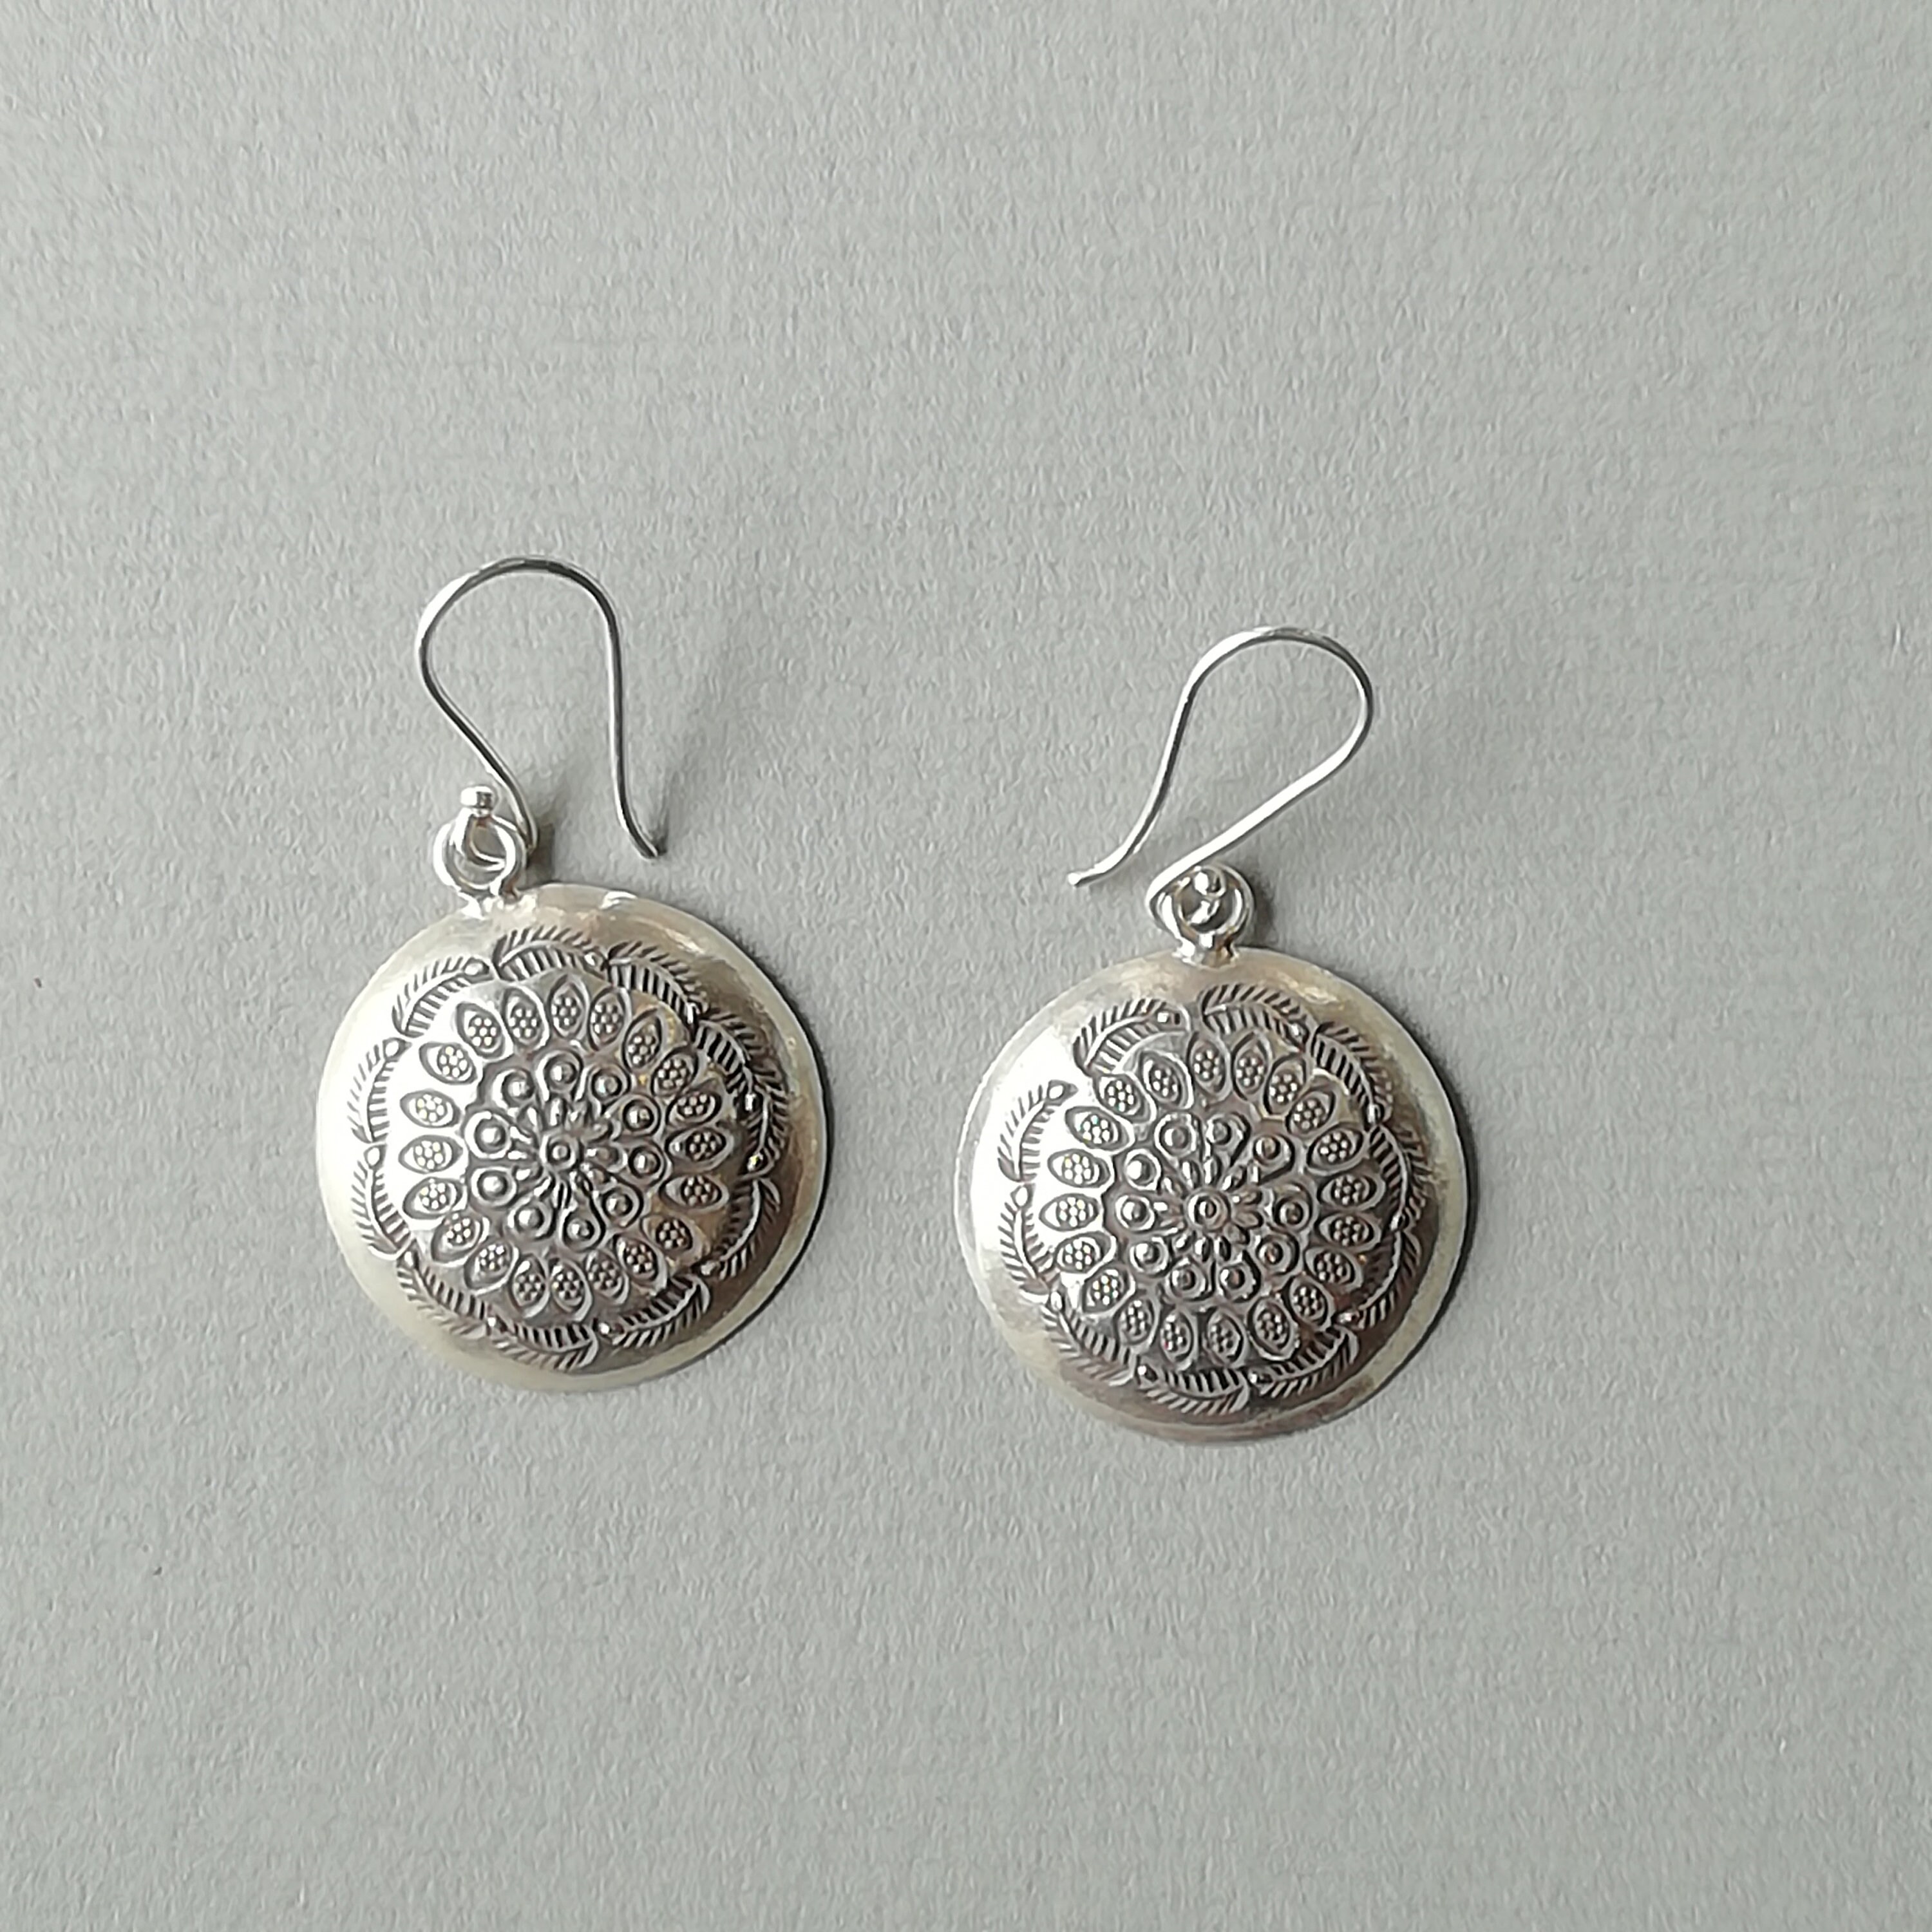 1 Pair Sterling Silver Floral Engraved Coin Earrings 1 Pair - Etsy UK